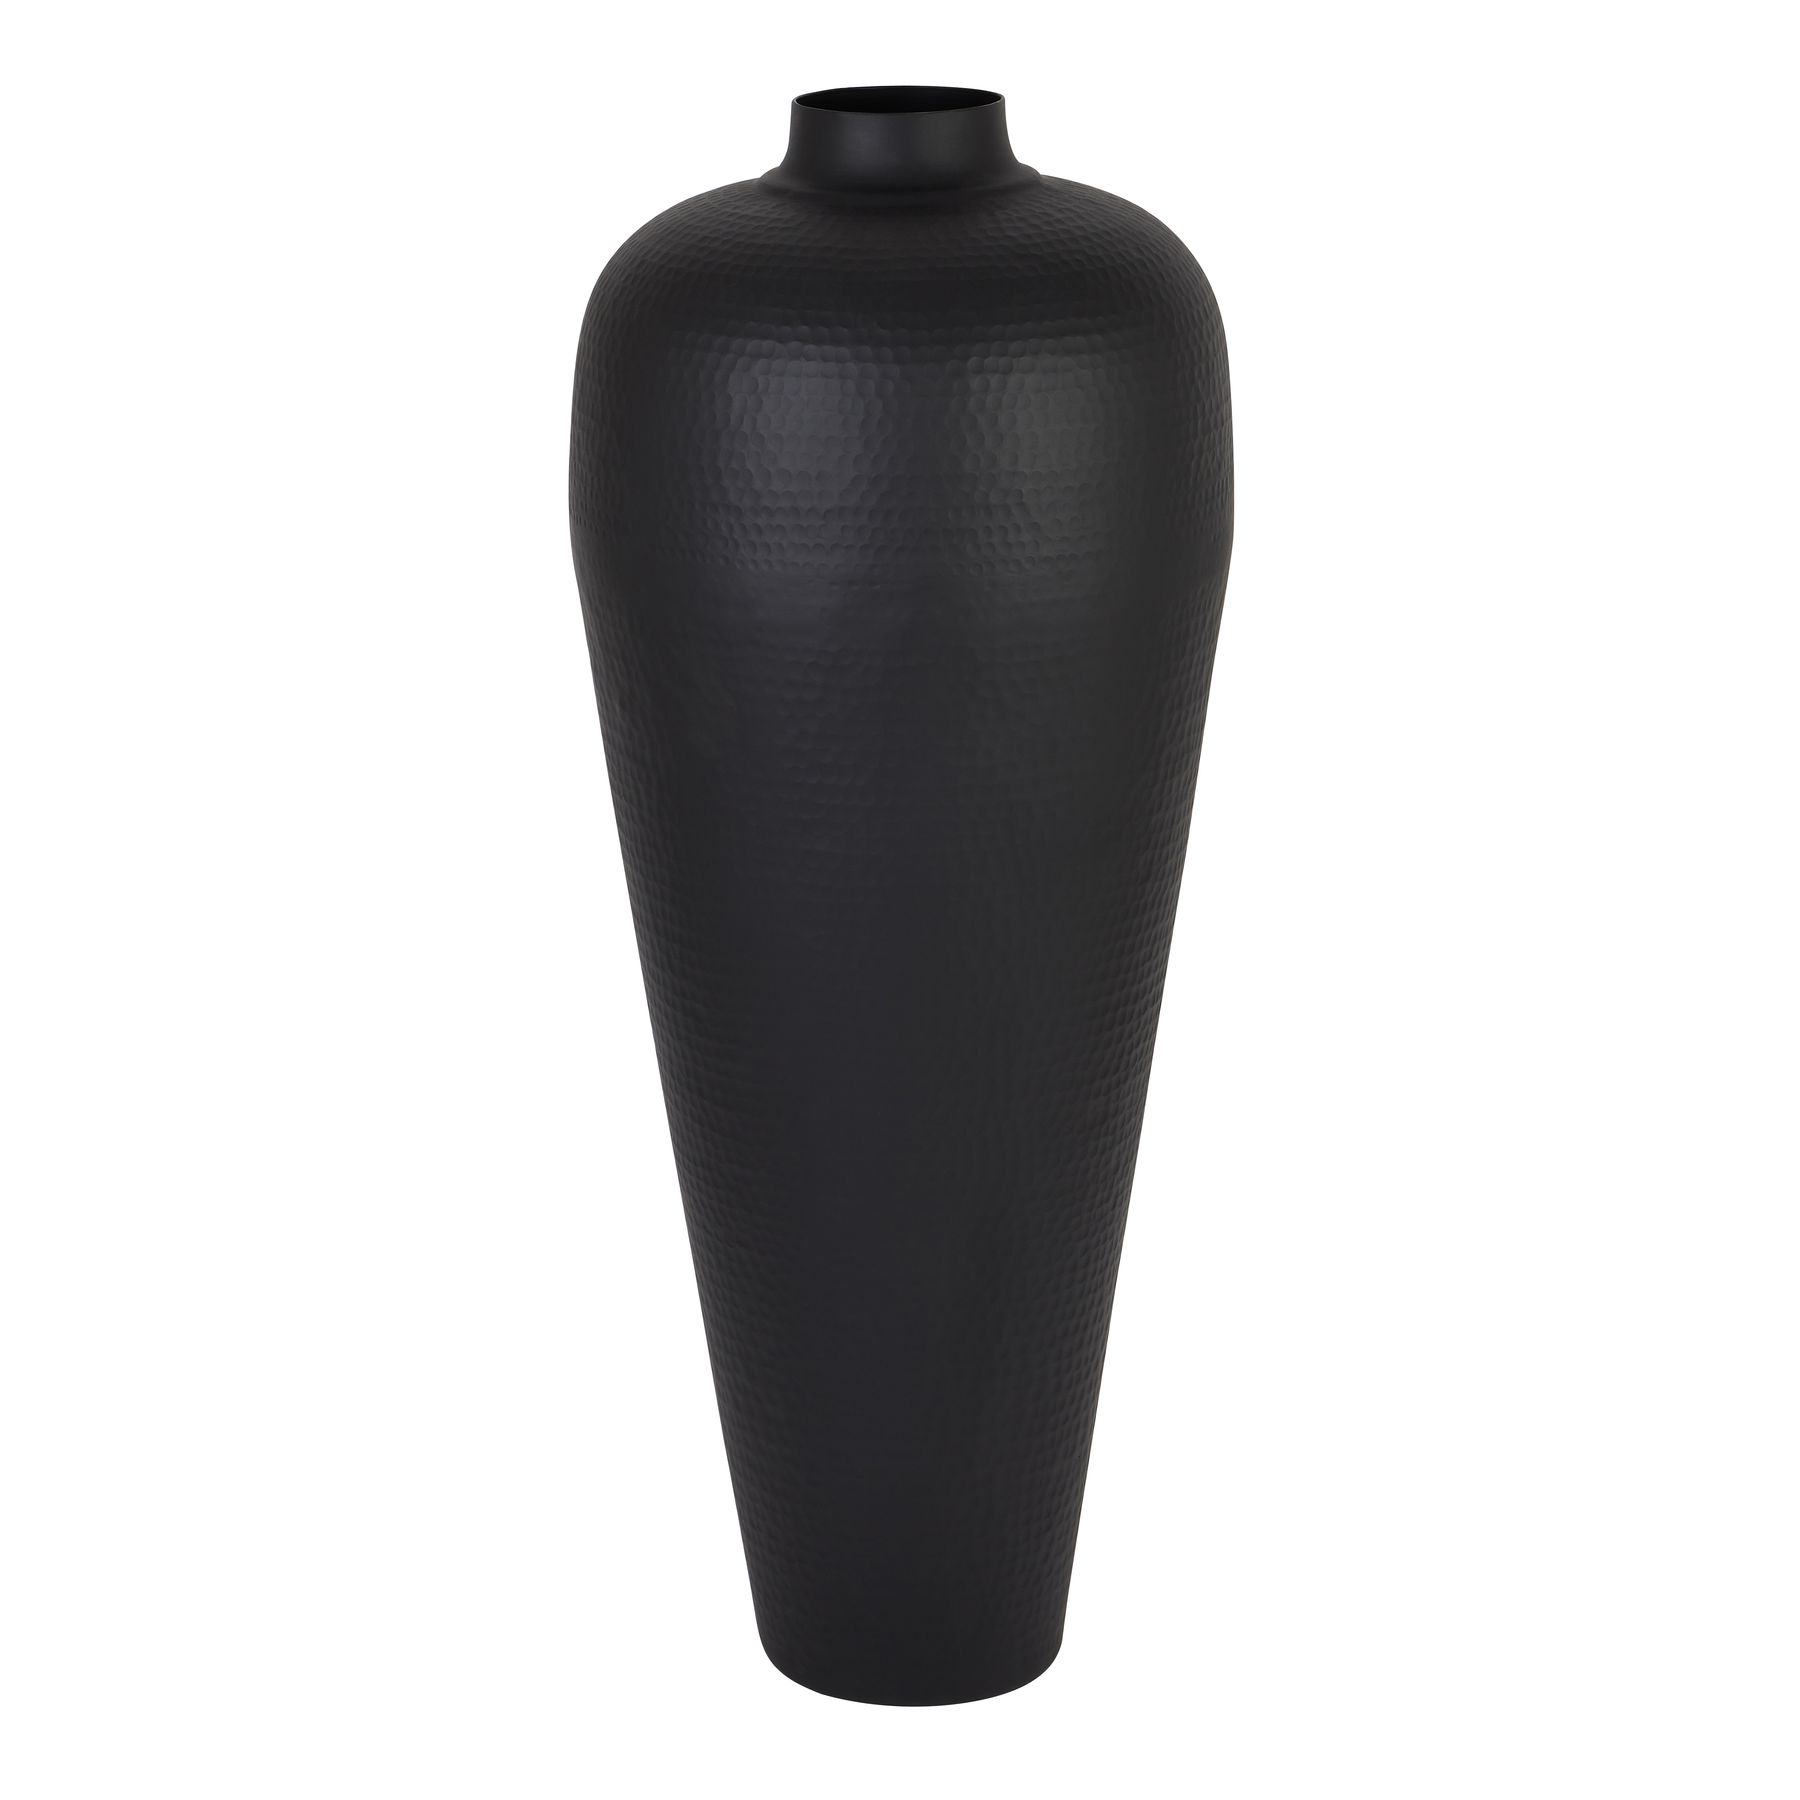 Matt Black Medium Hammered Vase Without Lid - Image 1